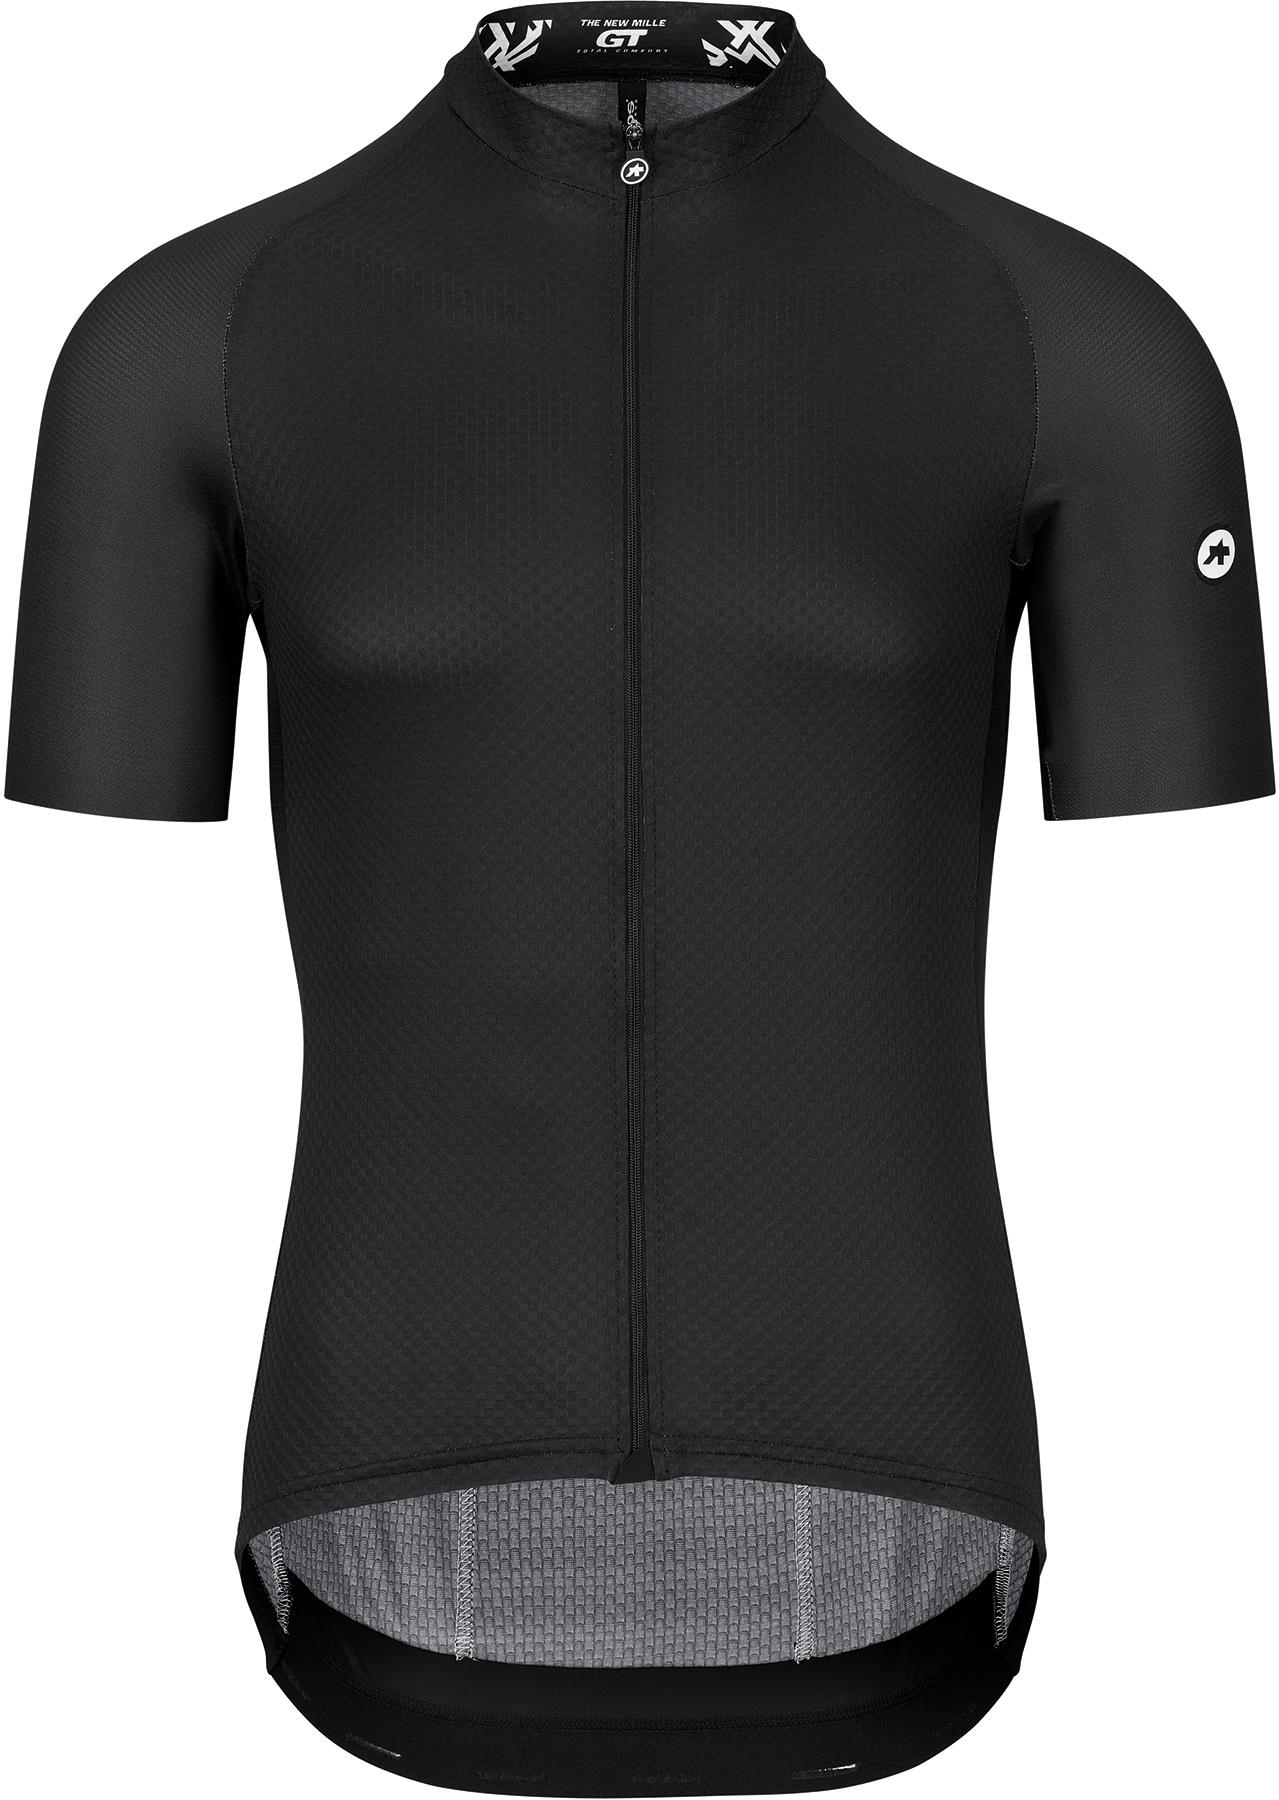 Assos Mille Gt Summer C2 Short Sleeve Cycling Jersey - Black Series